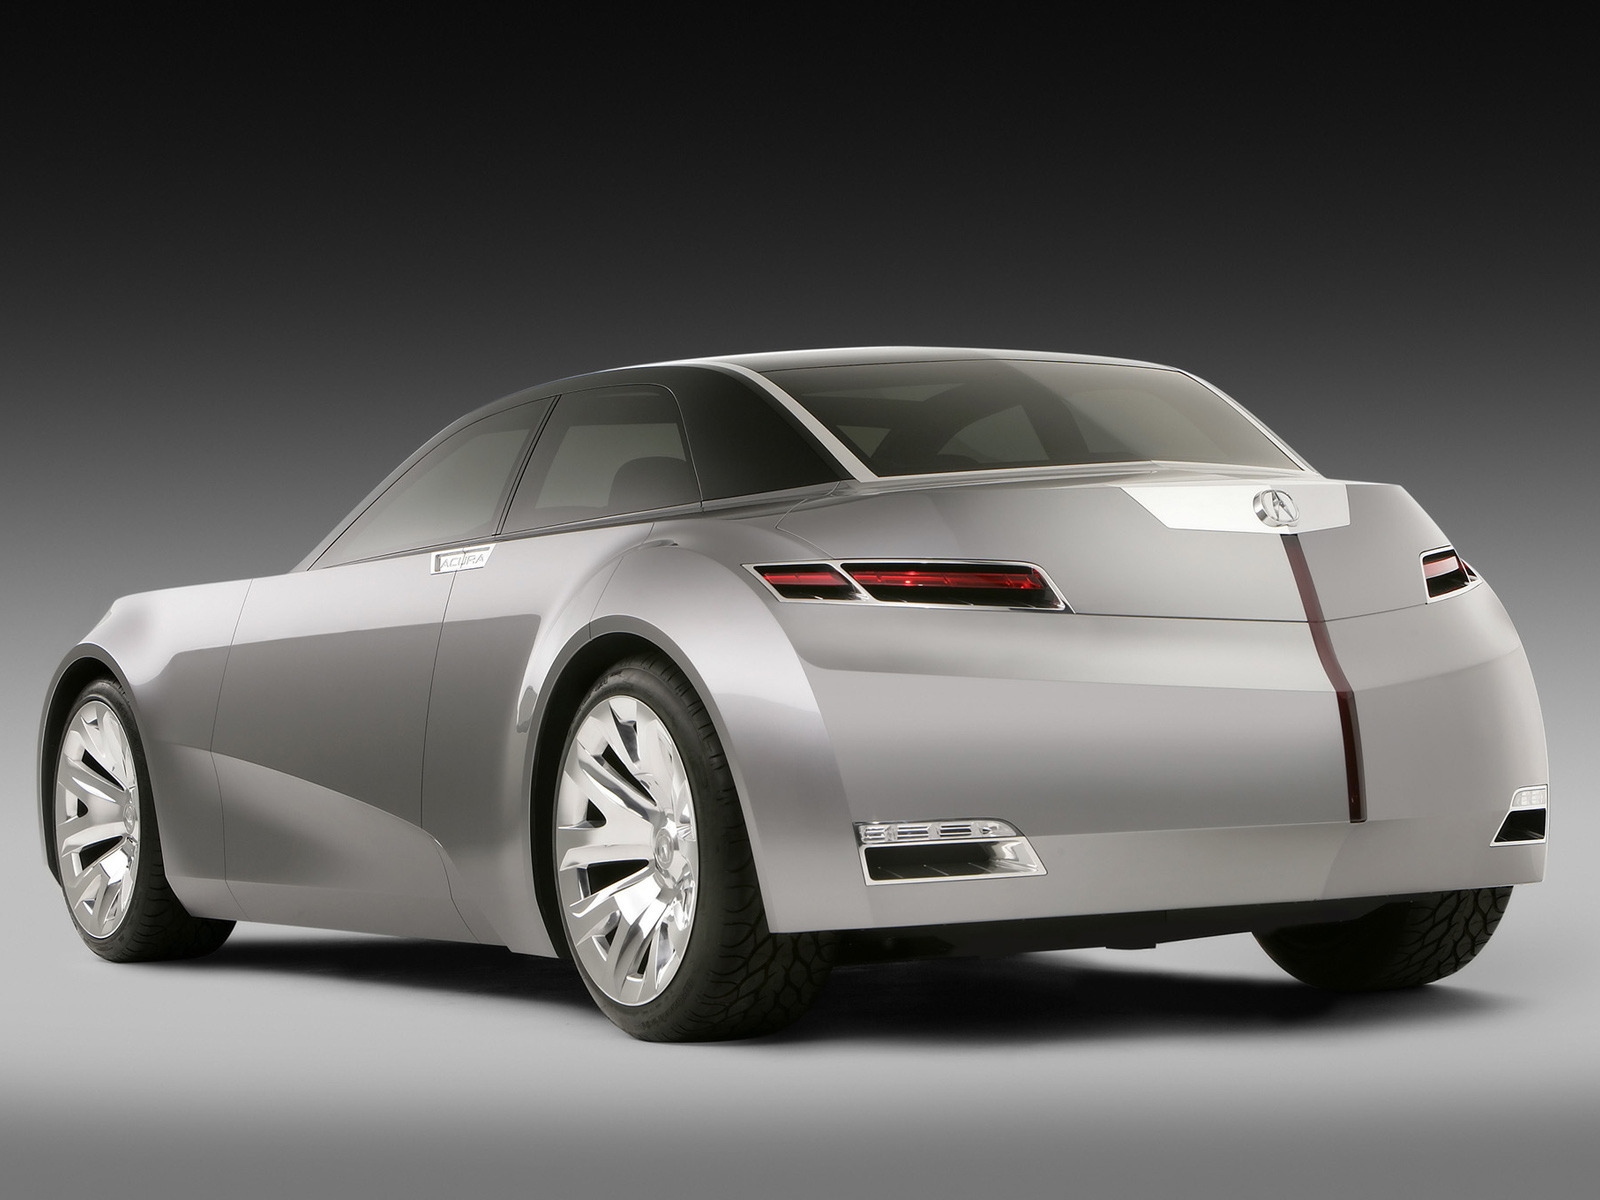 Acura Sedan Concept Rear for 1600 x 1200 resolution